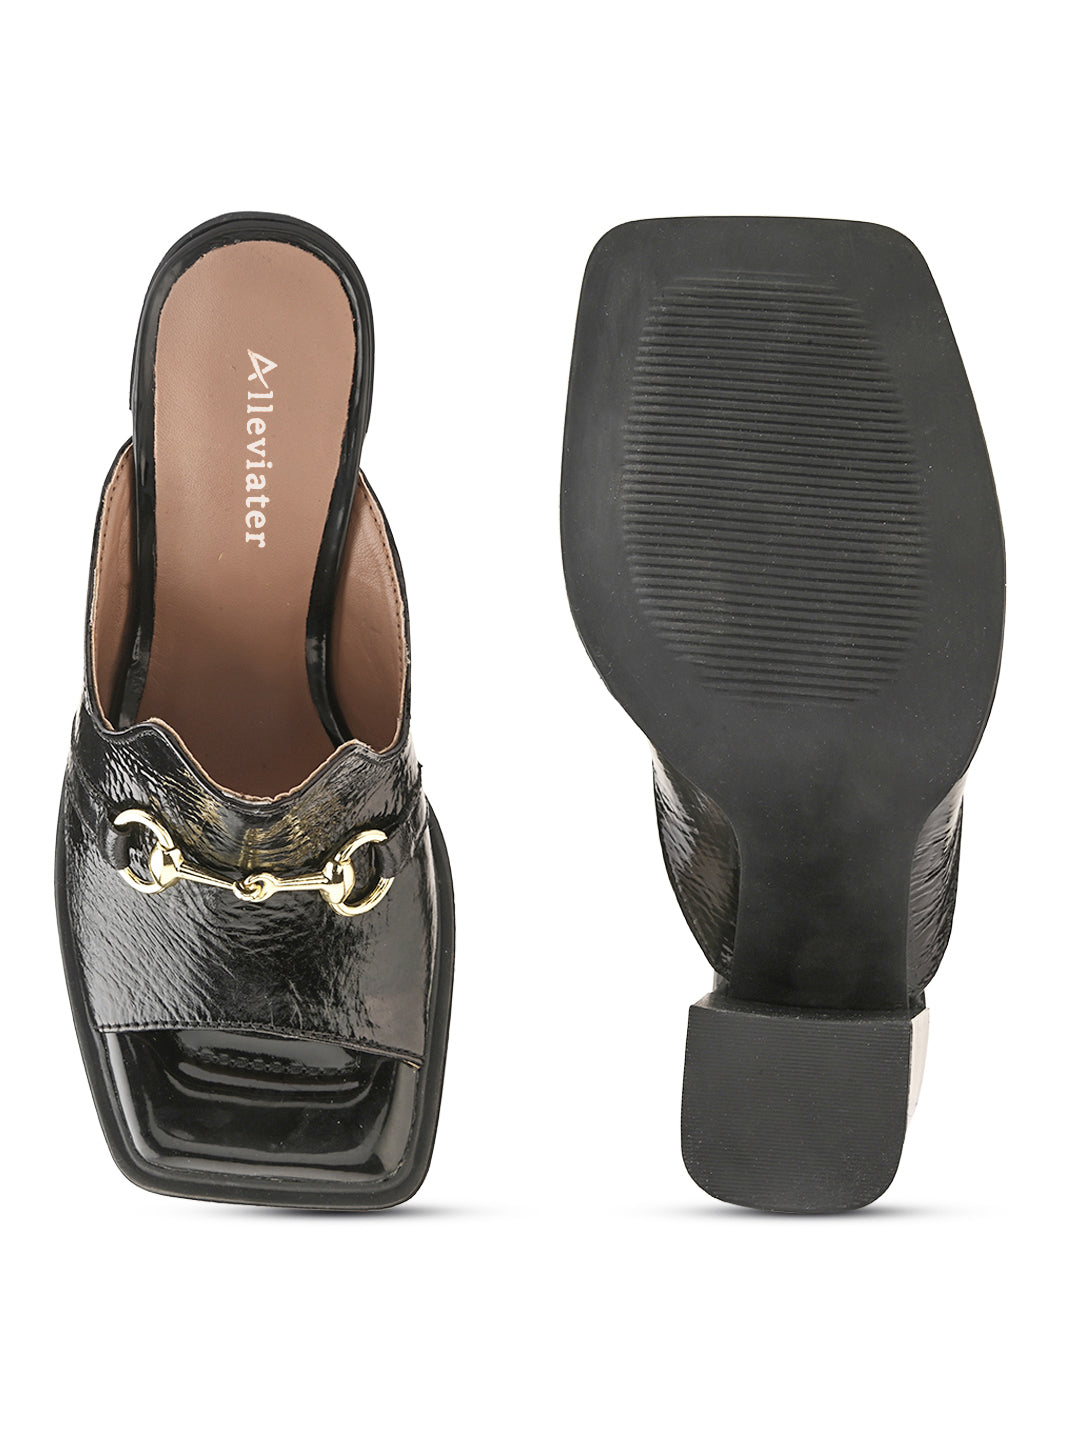 Buy Marie Claire Sawkin Mule Women Mule Sandals In BLACK at Amazon.in